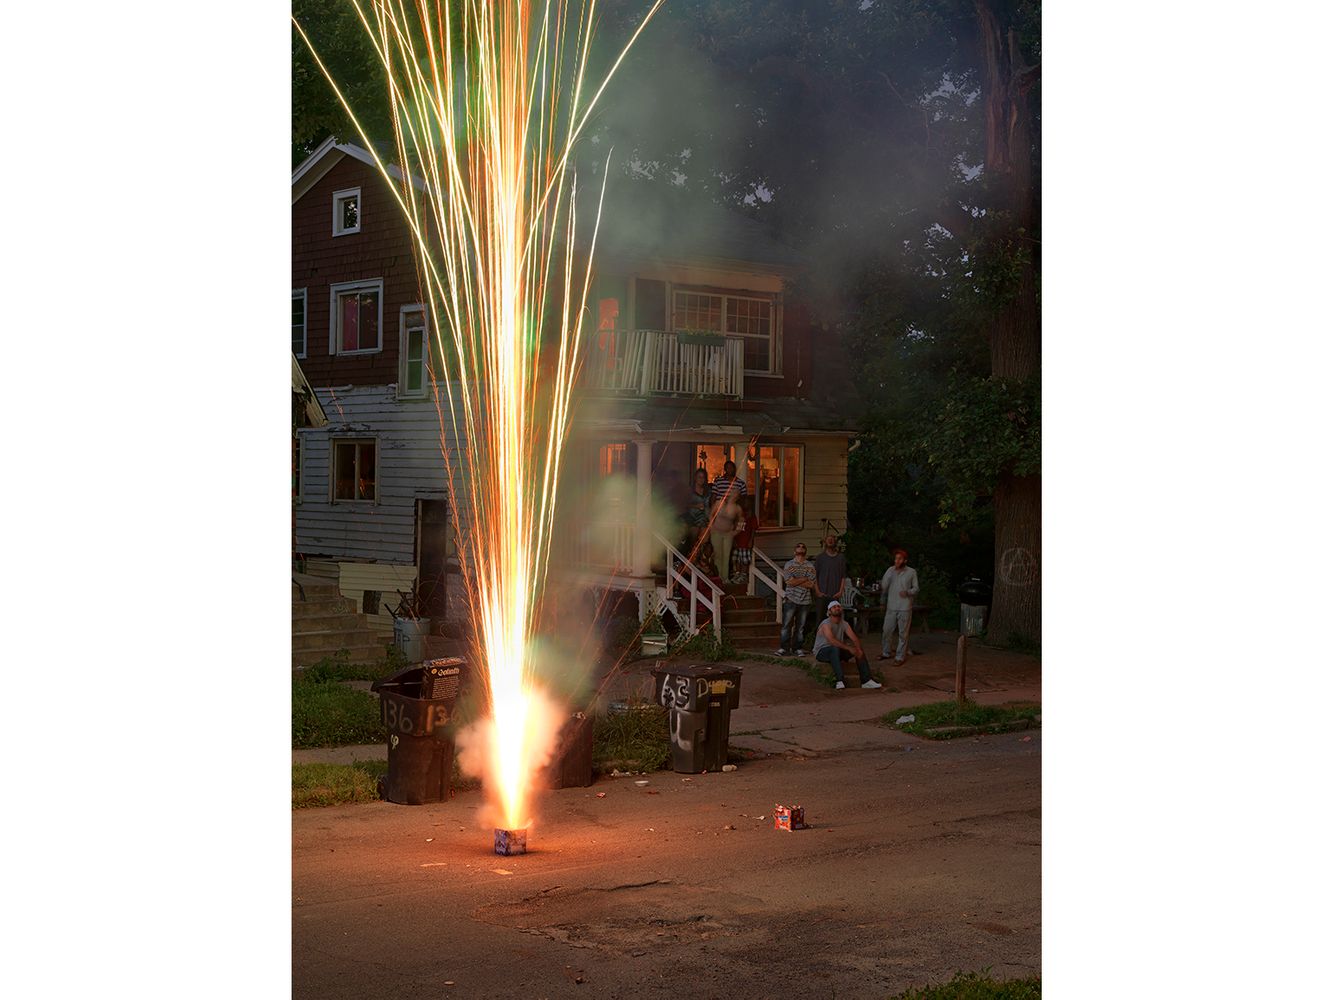 Neighborhood Fireworks on the 4th of July, Goldengate Street, Detroit 2014